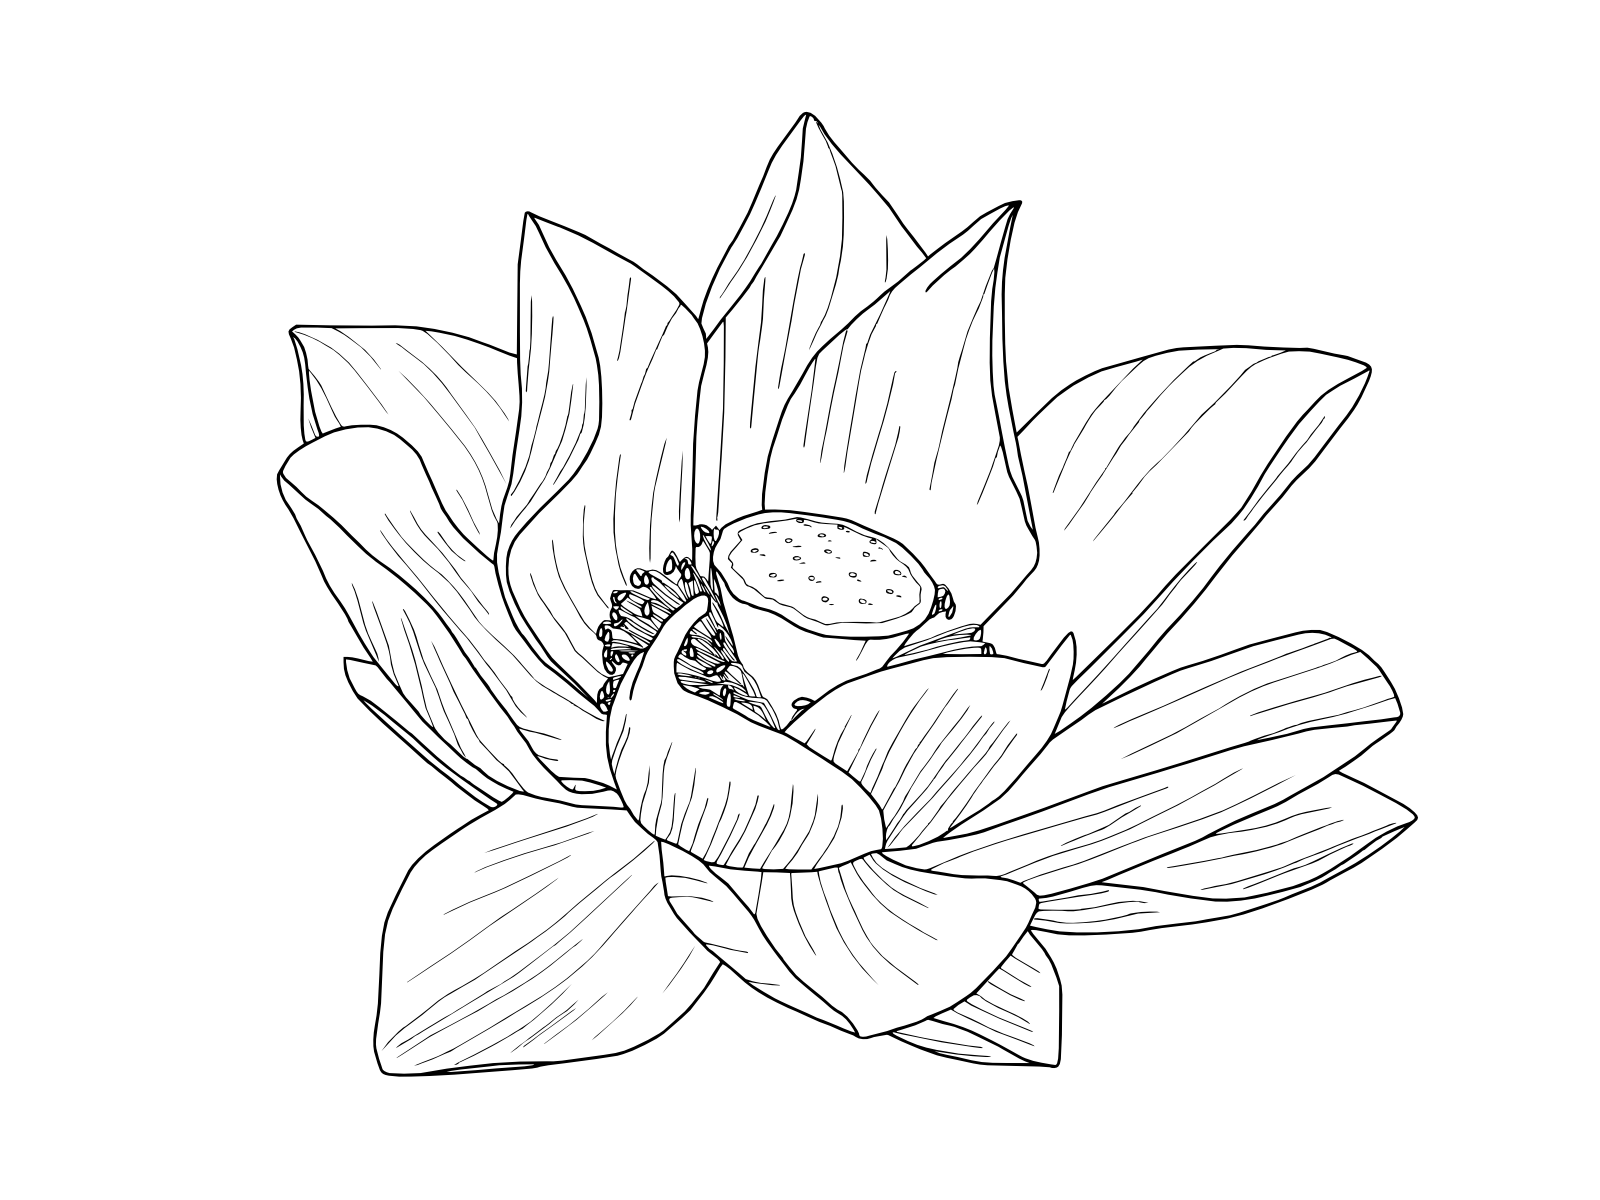 Moth clipart transparent tumblr. Eleletsitz flower drawing images